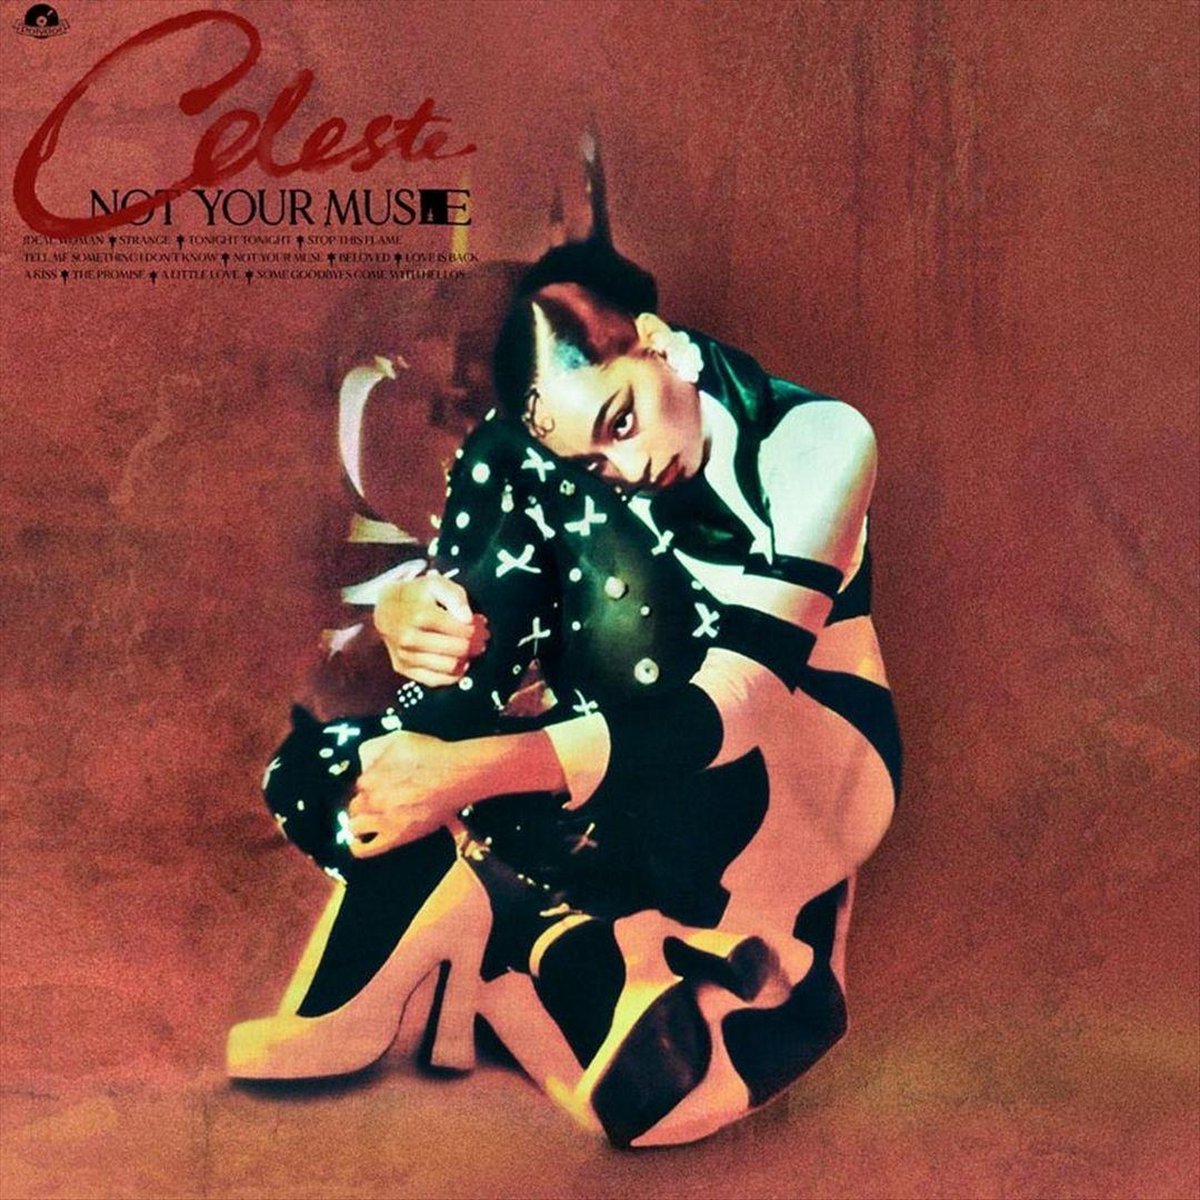 Celeste - Not Your Muse (CD) - Celeste